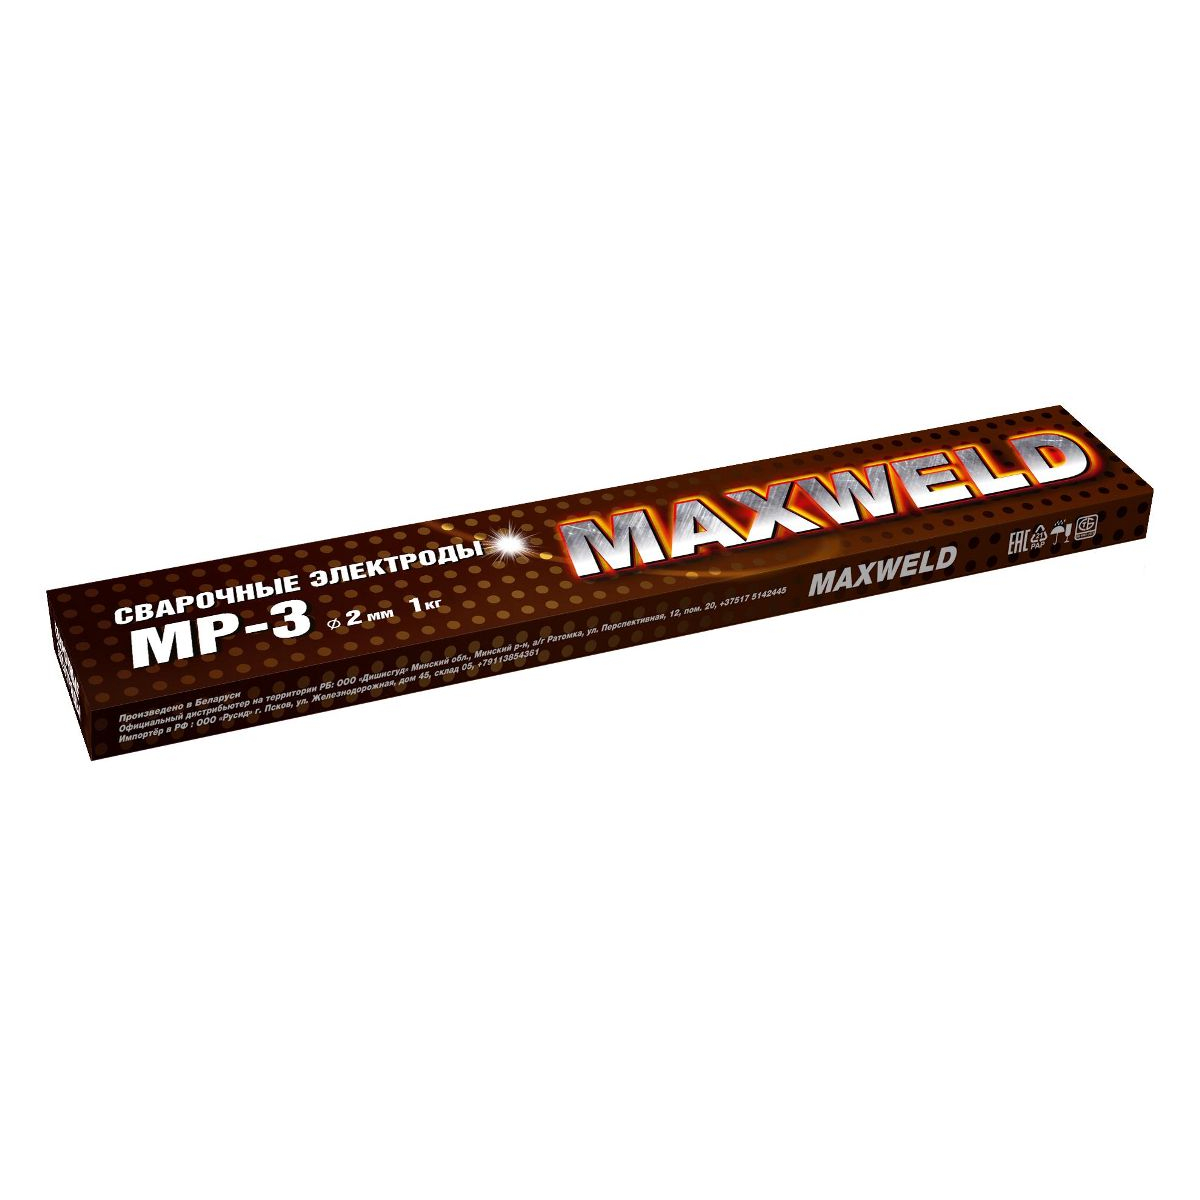 maxweld электроды сталь мр 3 2 5мм 1кг mr251 Электроды Maxweld СТАЛЬ МР-3 2мм, 1 кг